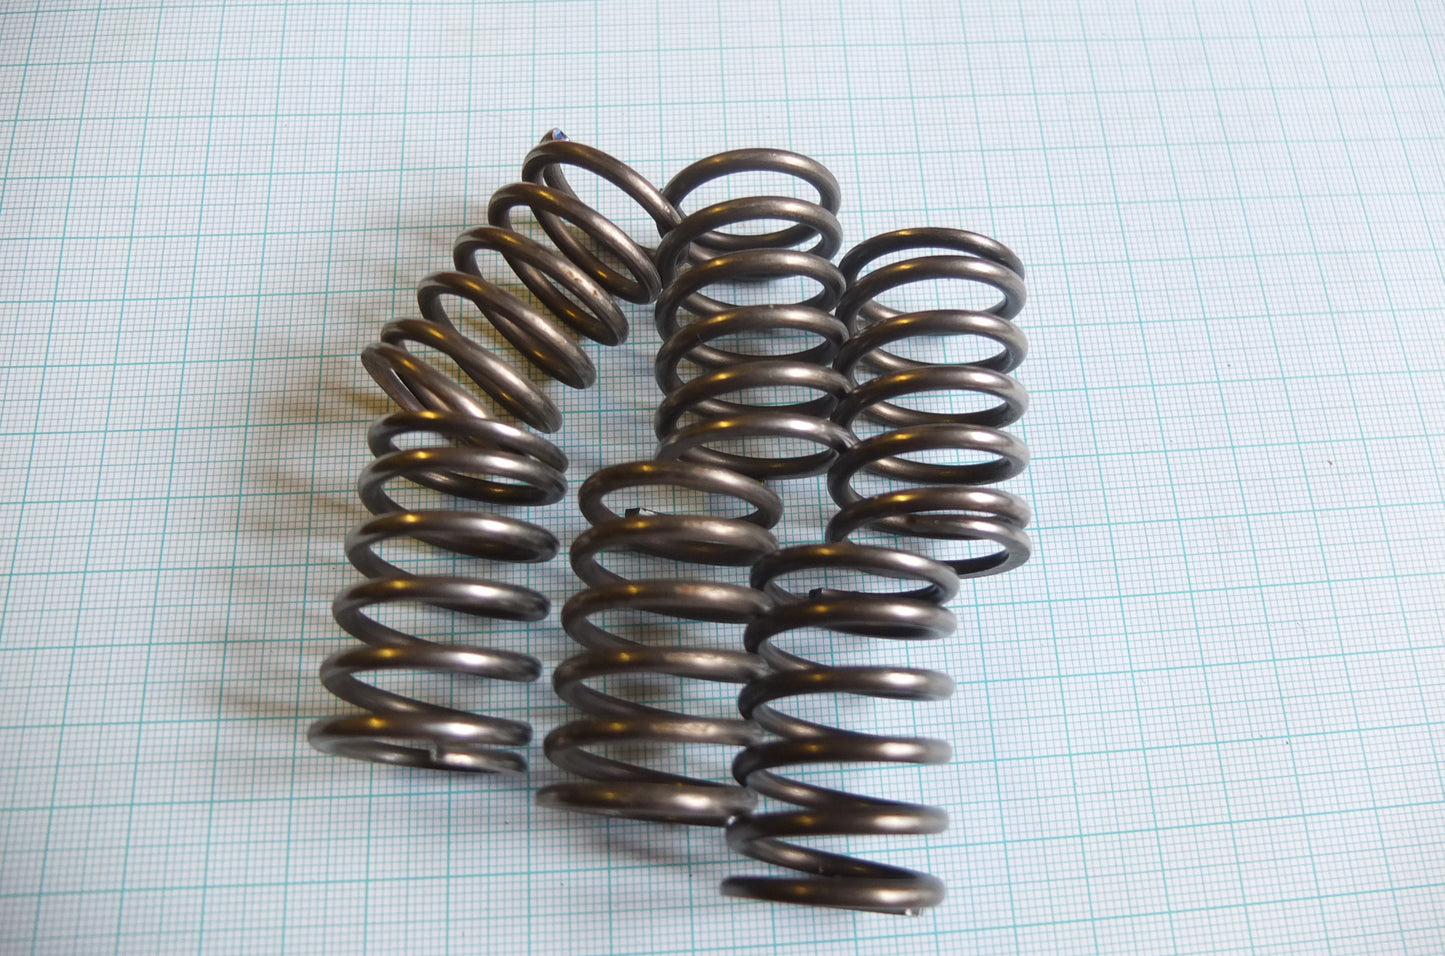 P1/154 Clutch springs [set of six]